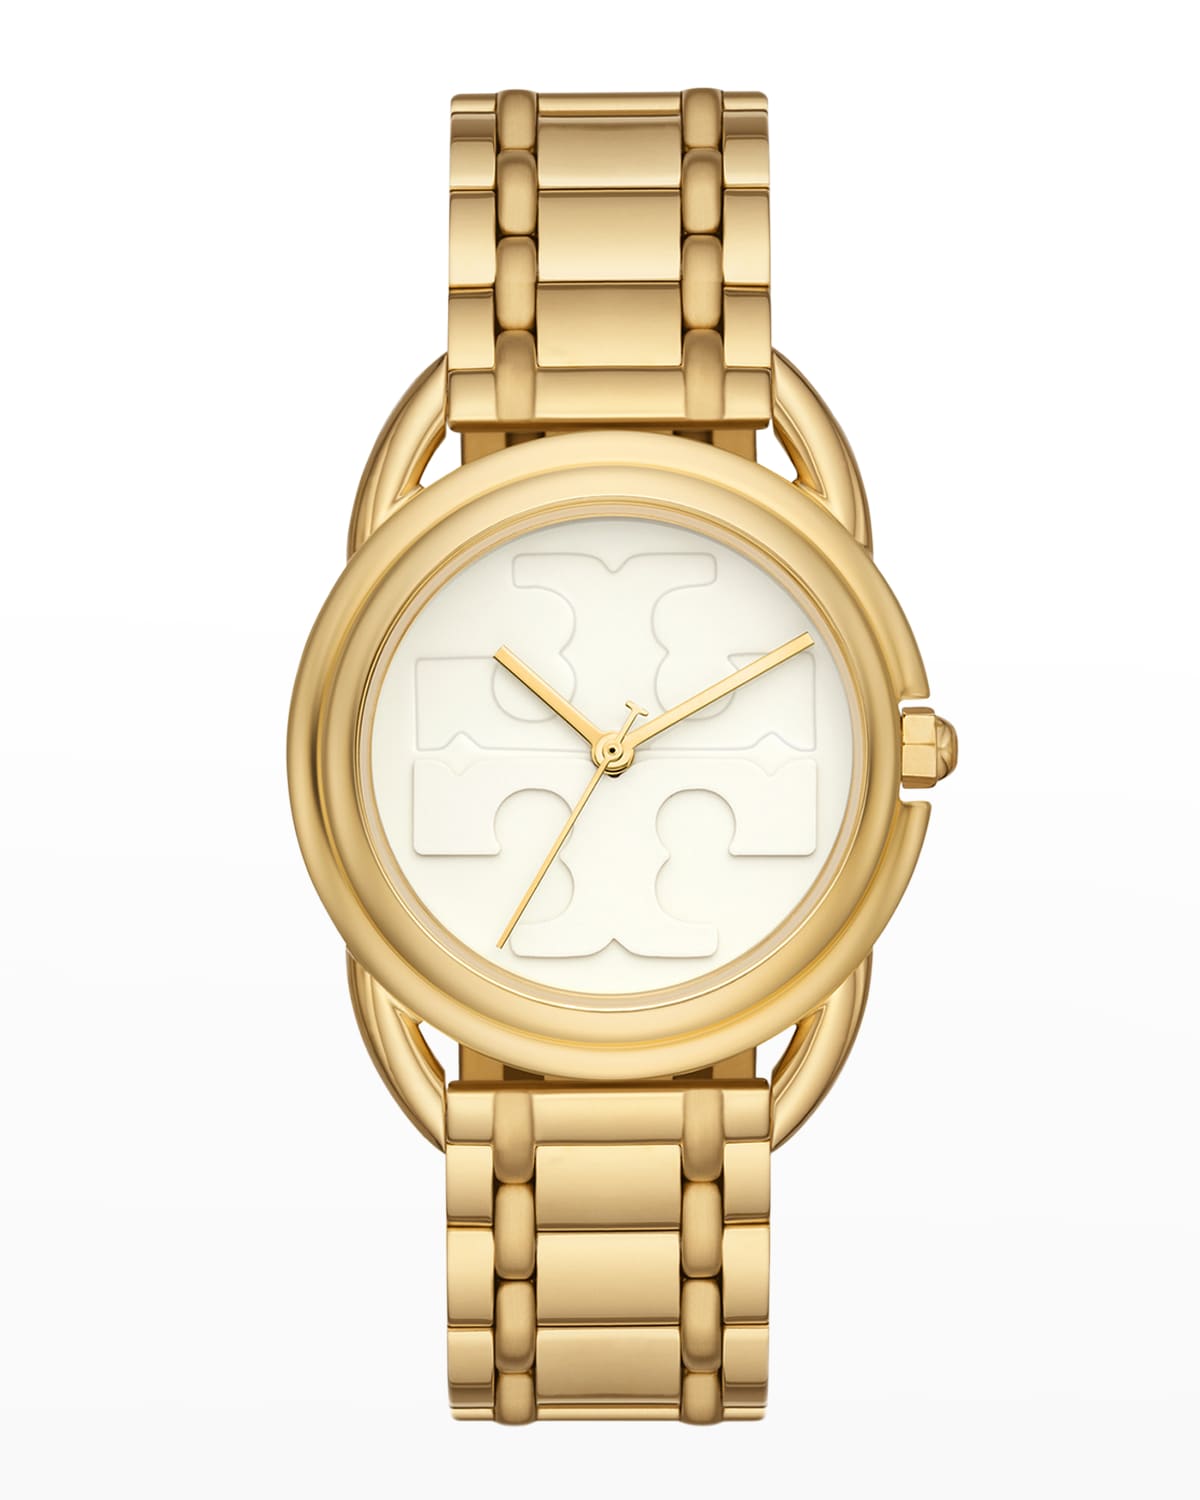 The Miller Gold-Tone Bracelet Watch